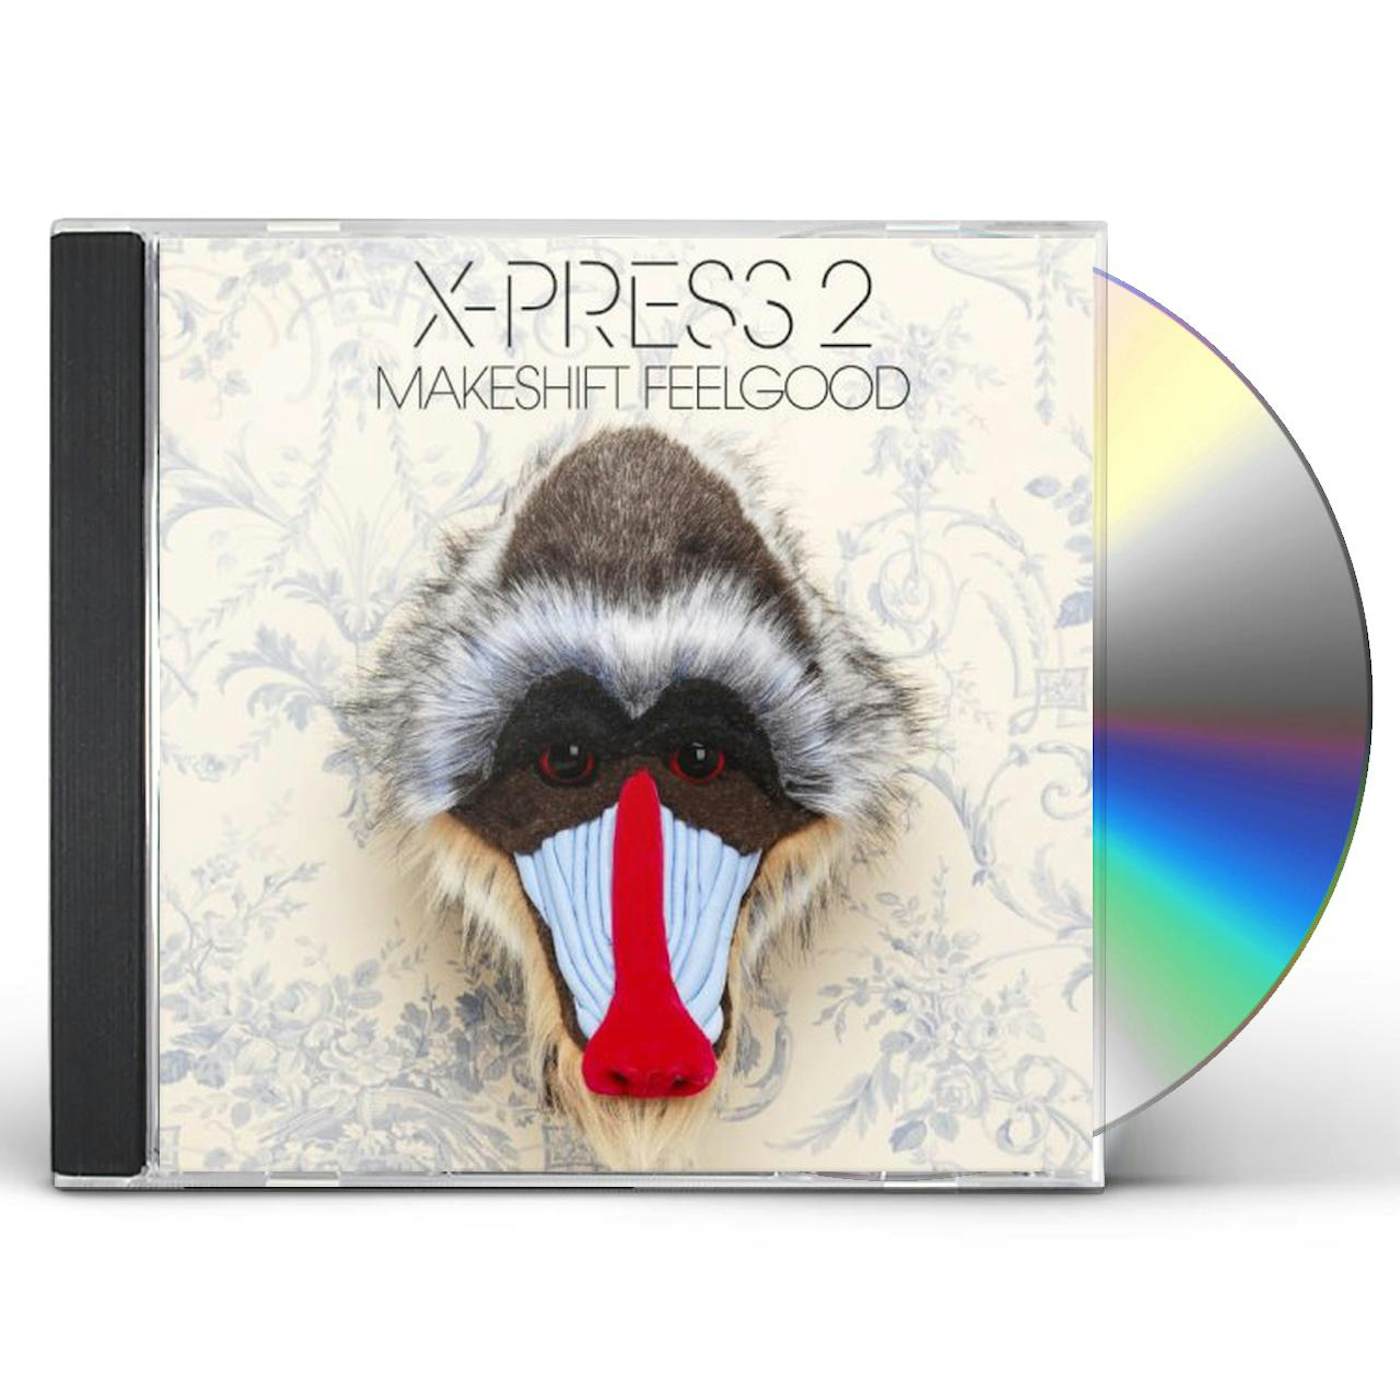 X-Press 2 MAKESHIFT FEELGOOD CD